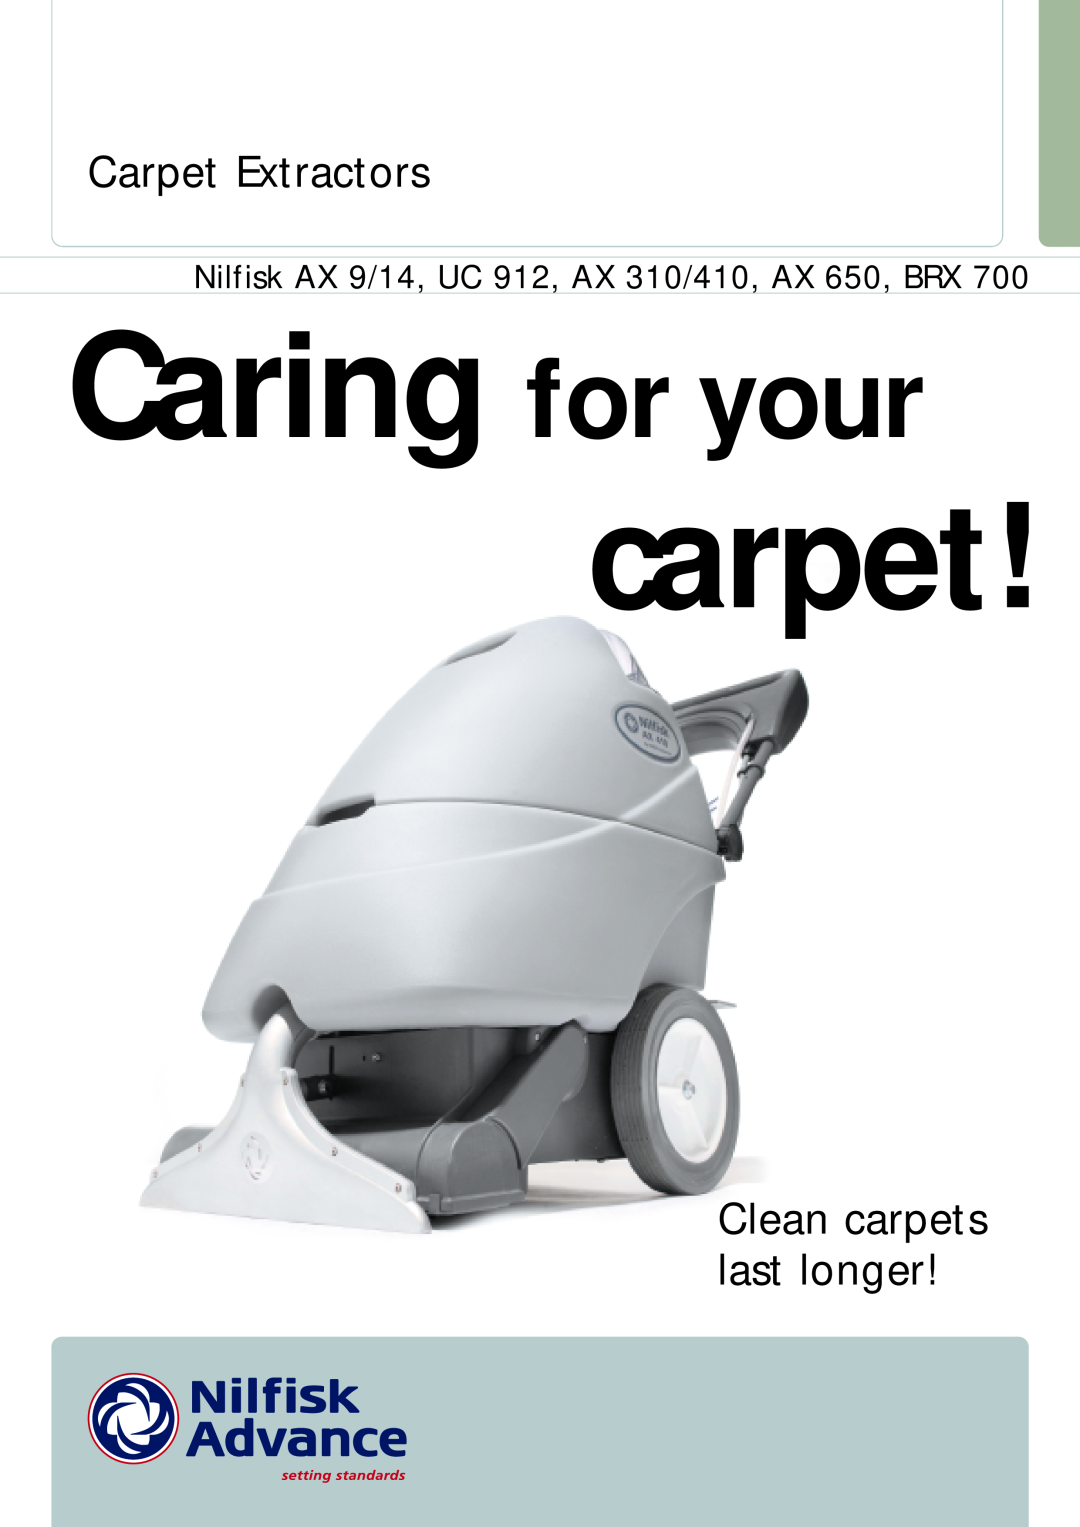 Nilfisk-ALTO AX 410, AX 310 manual Carpet Extractors, Clean carpets last longer, Caring for your 